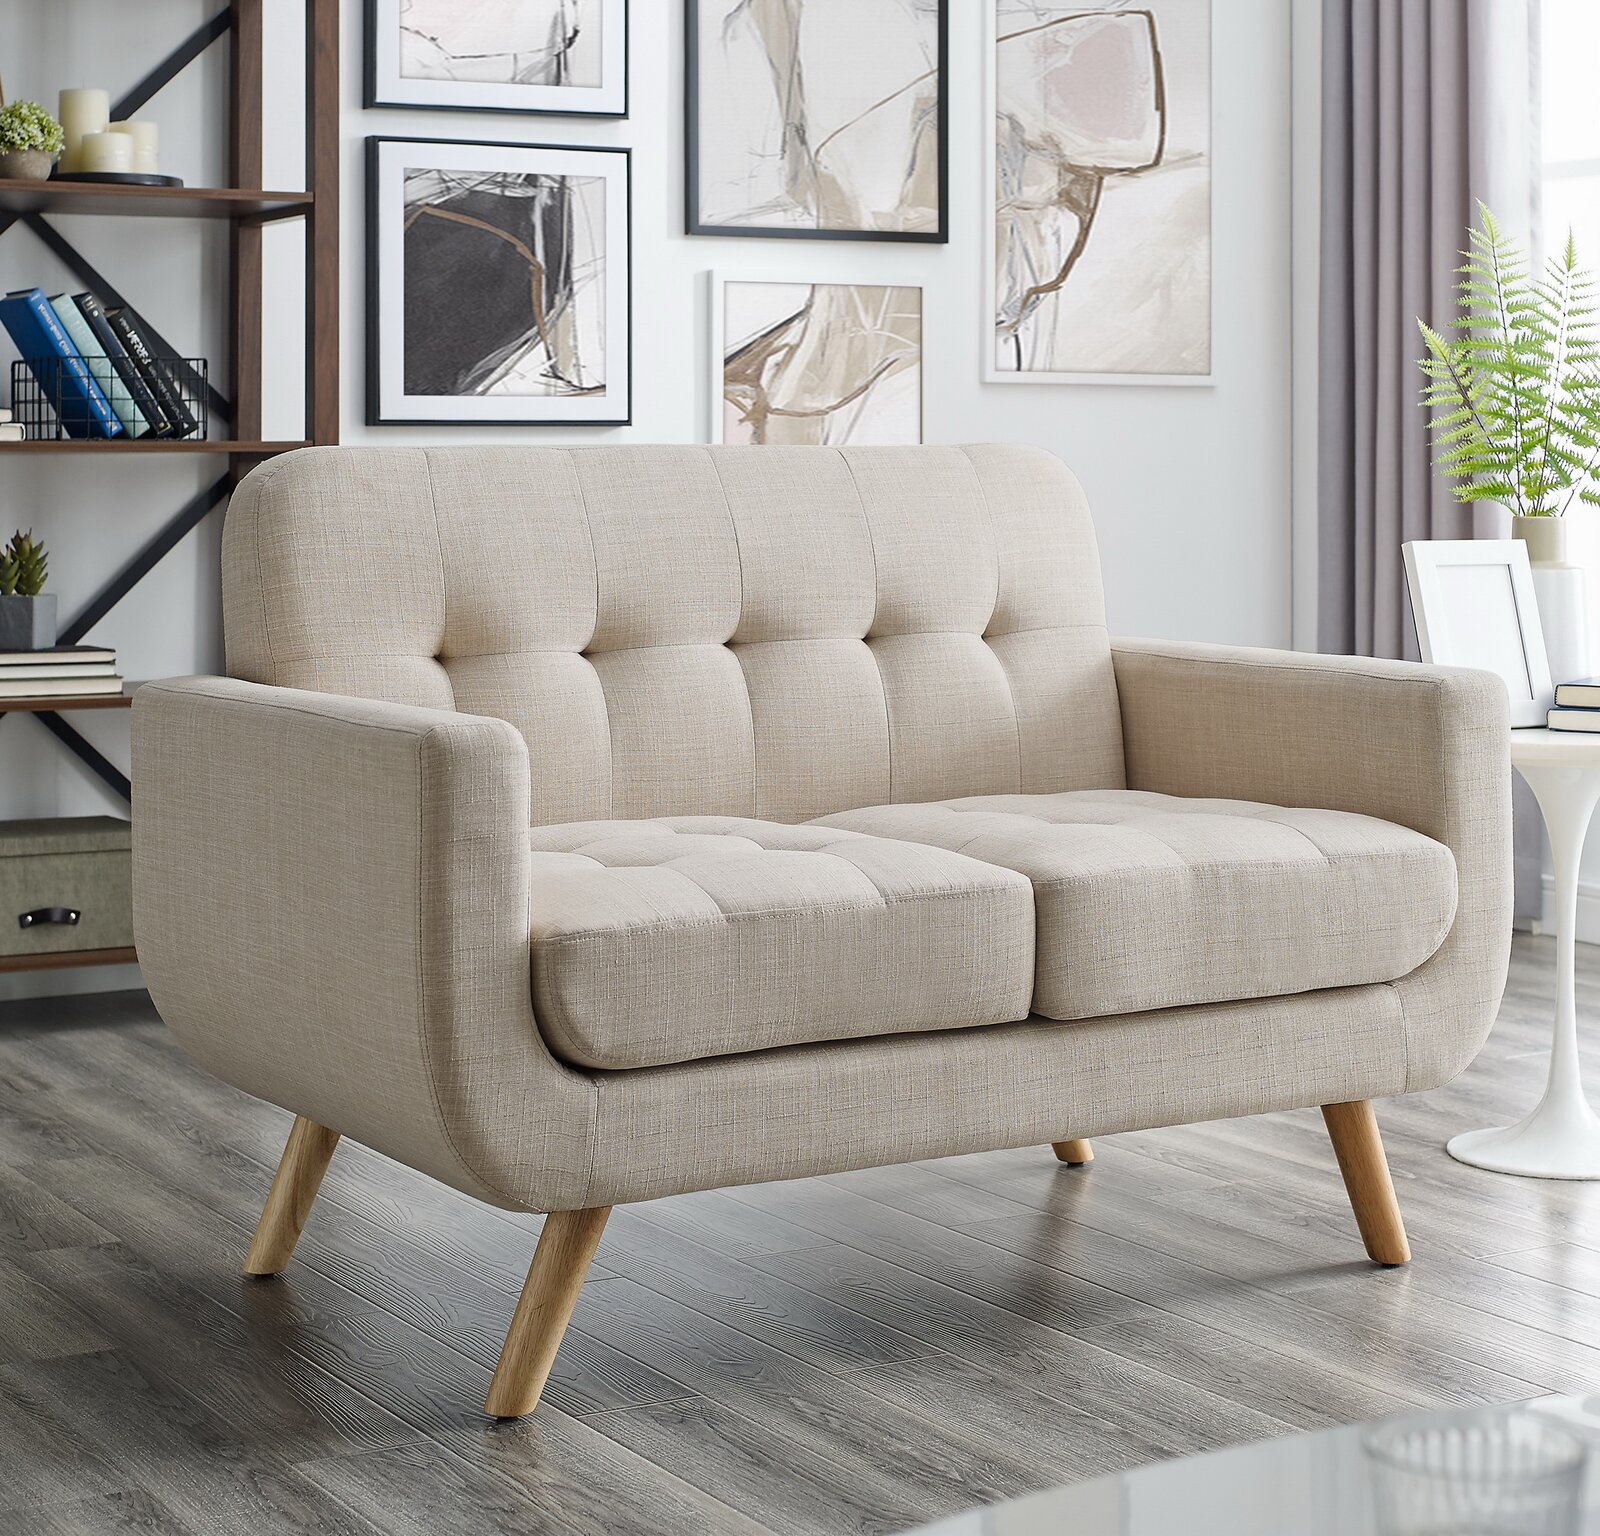 Goot Meditatief het is mooi 25 Latest Sofa Designs & Trends - Décor Aid